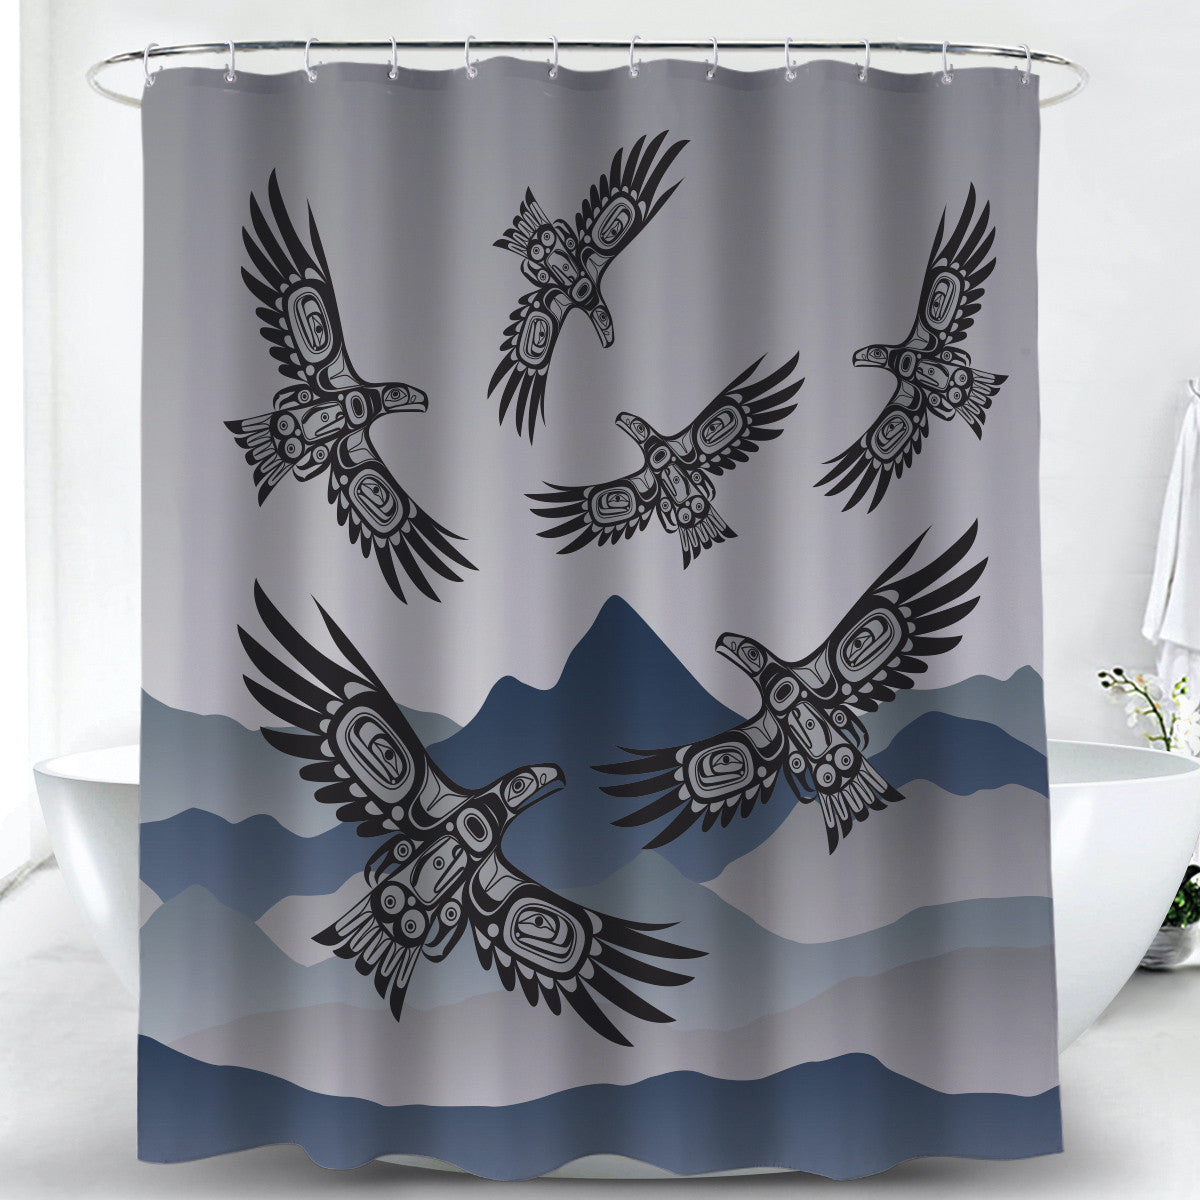 Shower Curtain - Soaring Eagle by Corey Bulpitt